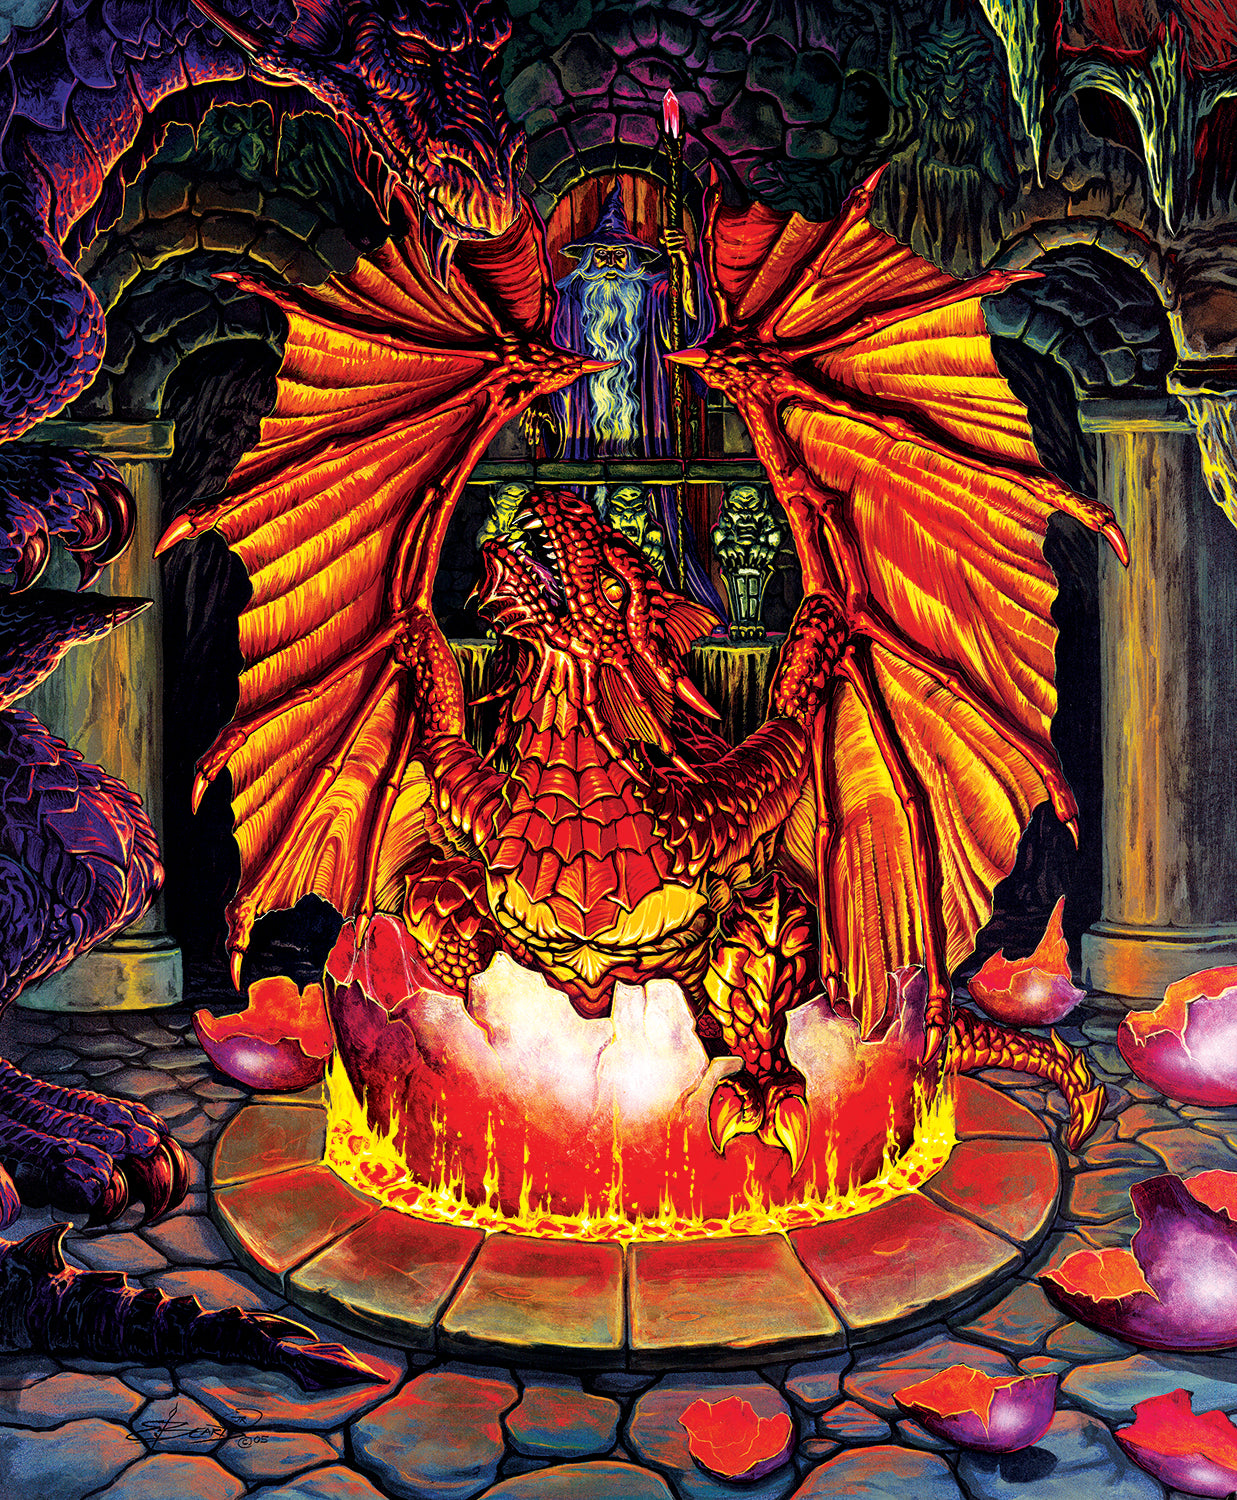 Birth of a Fire Dragon - 1000 Piece Jigsaw Puzzle